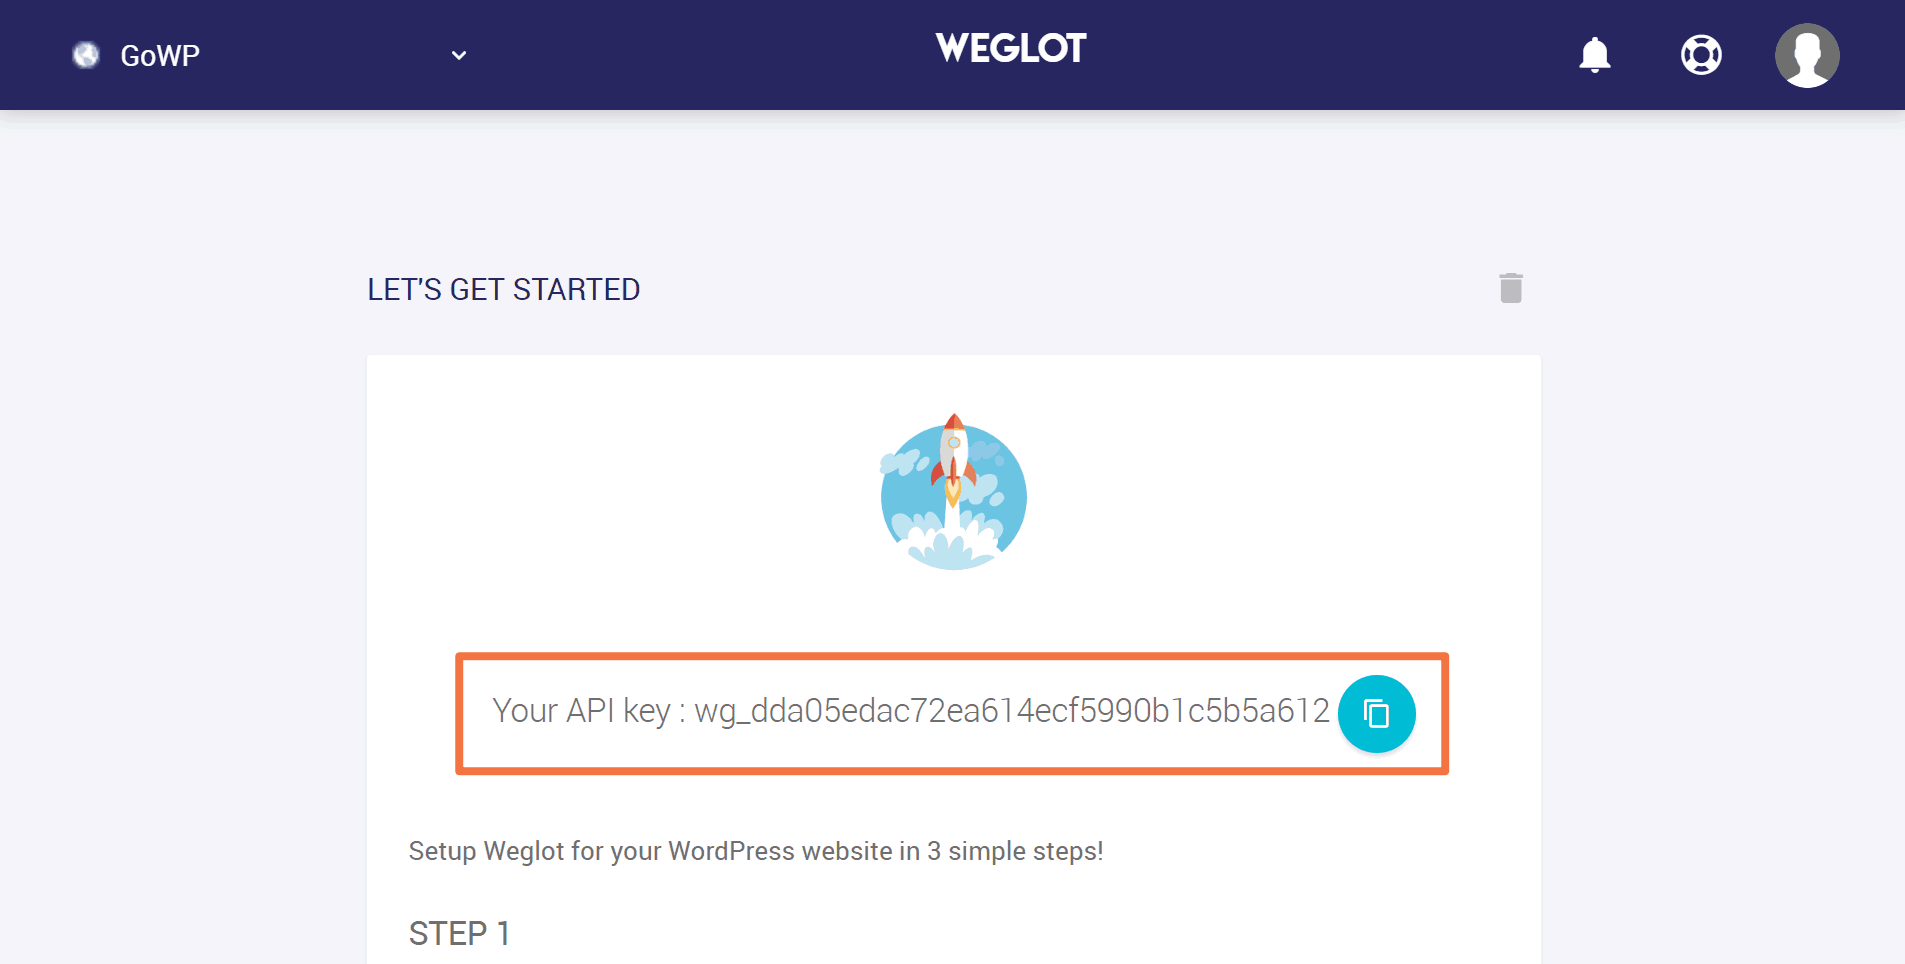 Create Weglot account and get API key